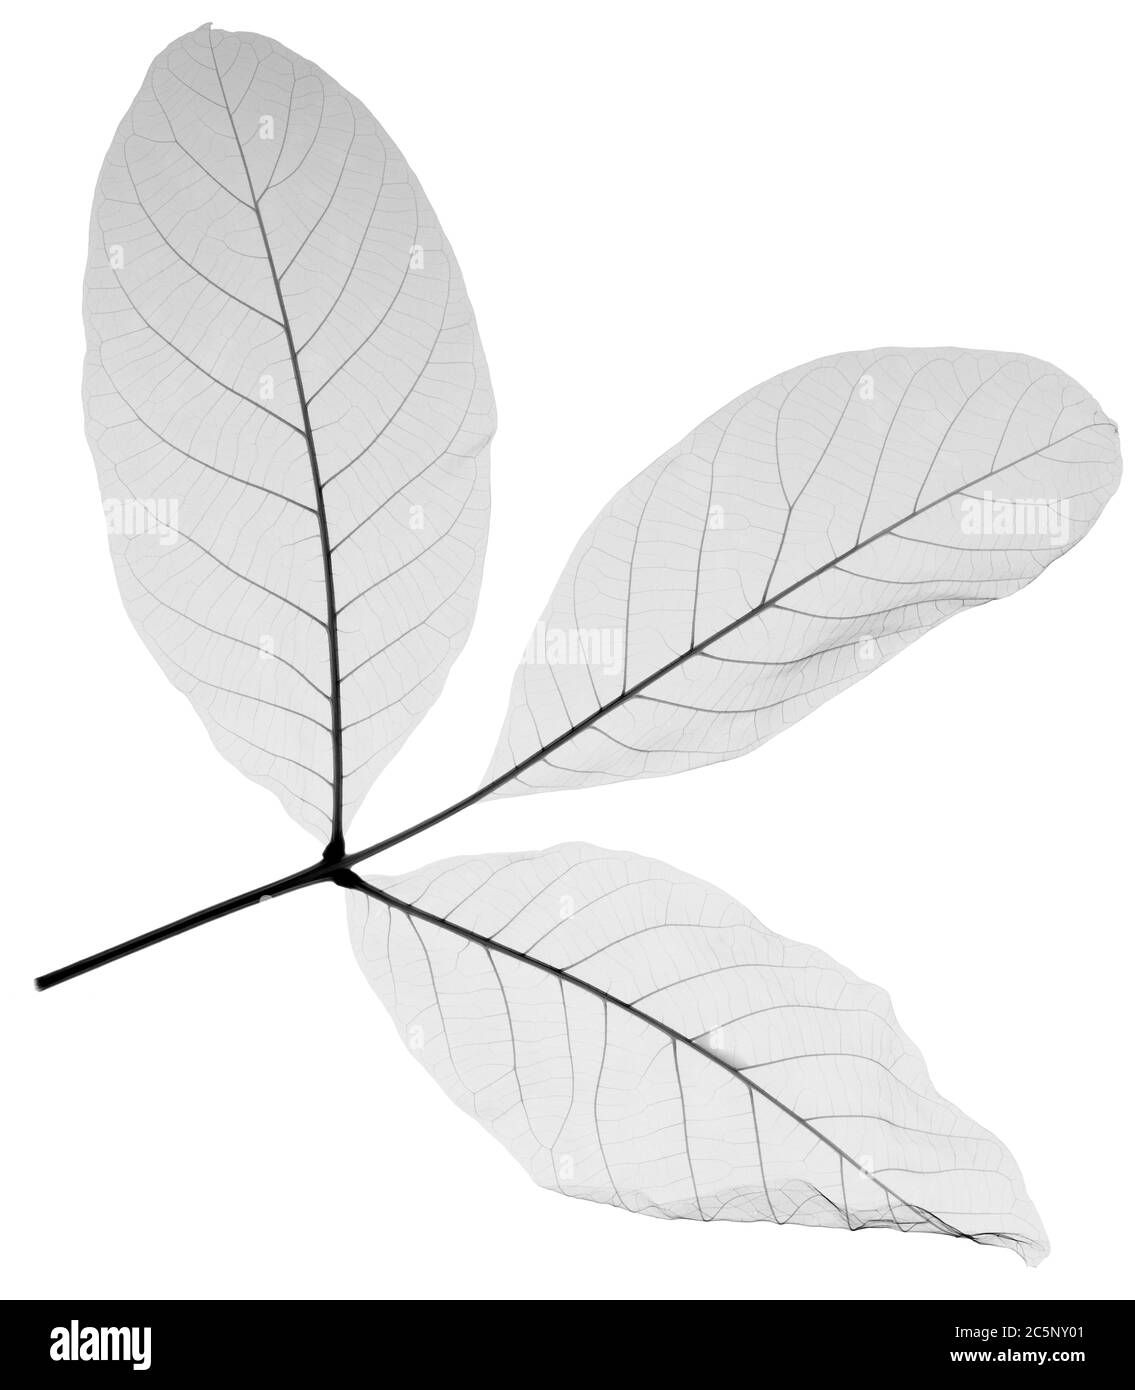 Sprig of viburnum leaves, X-ray. Stock Photo